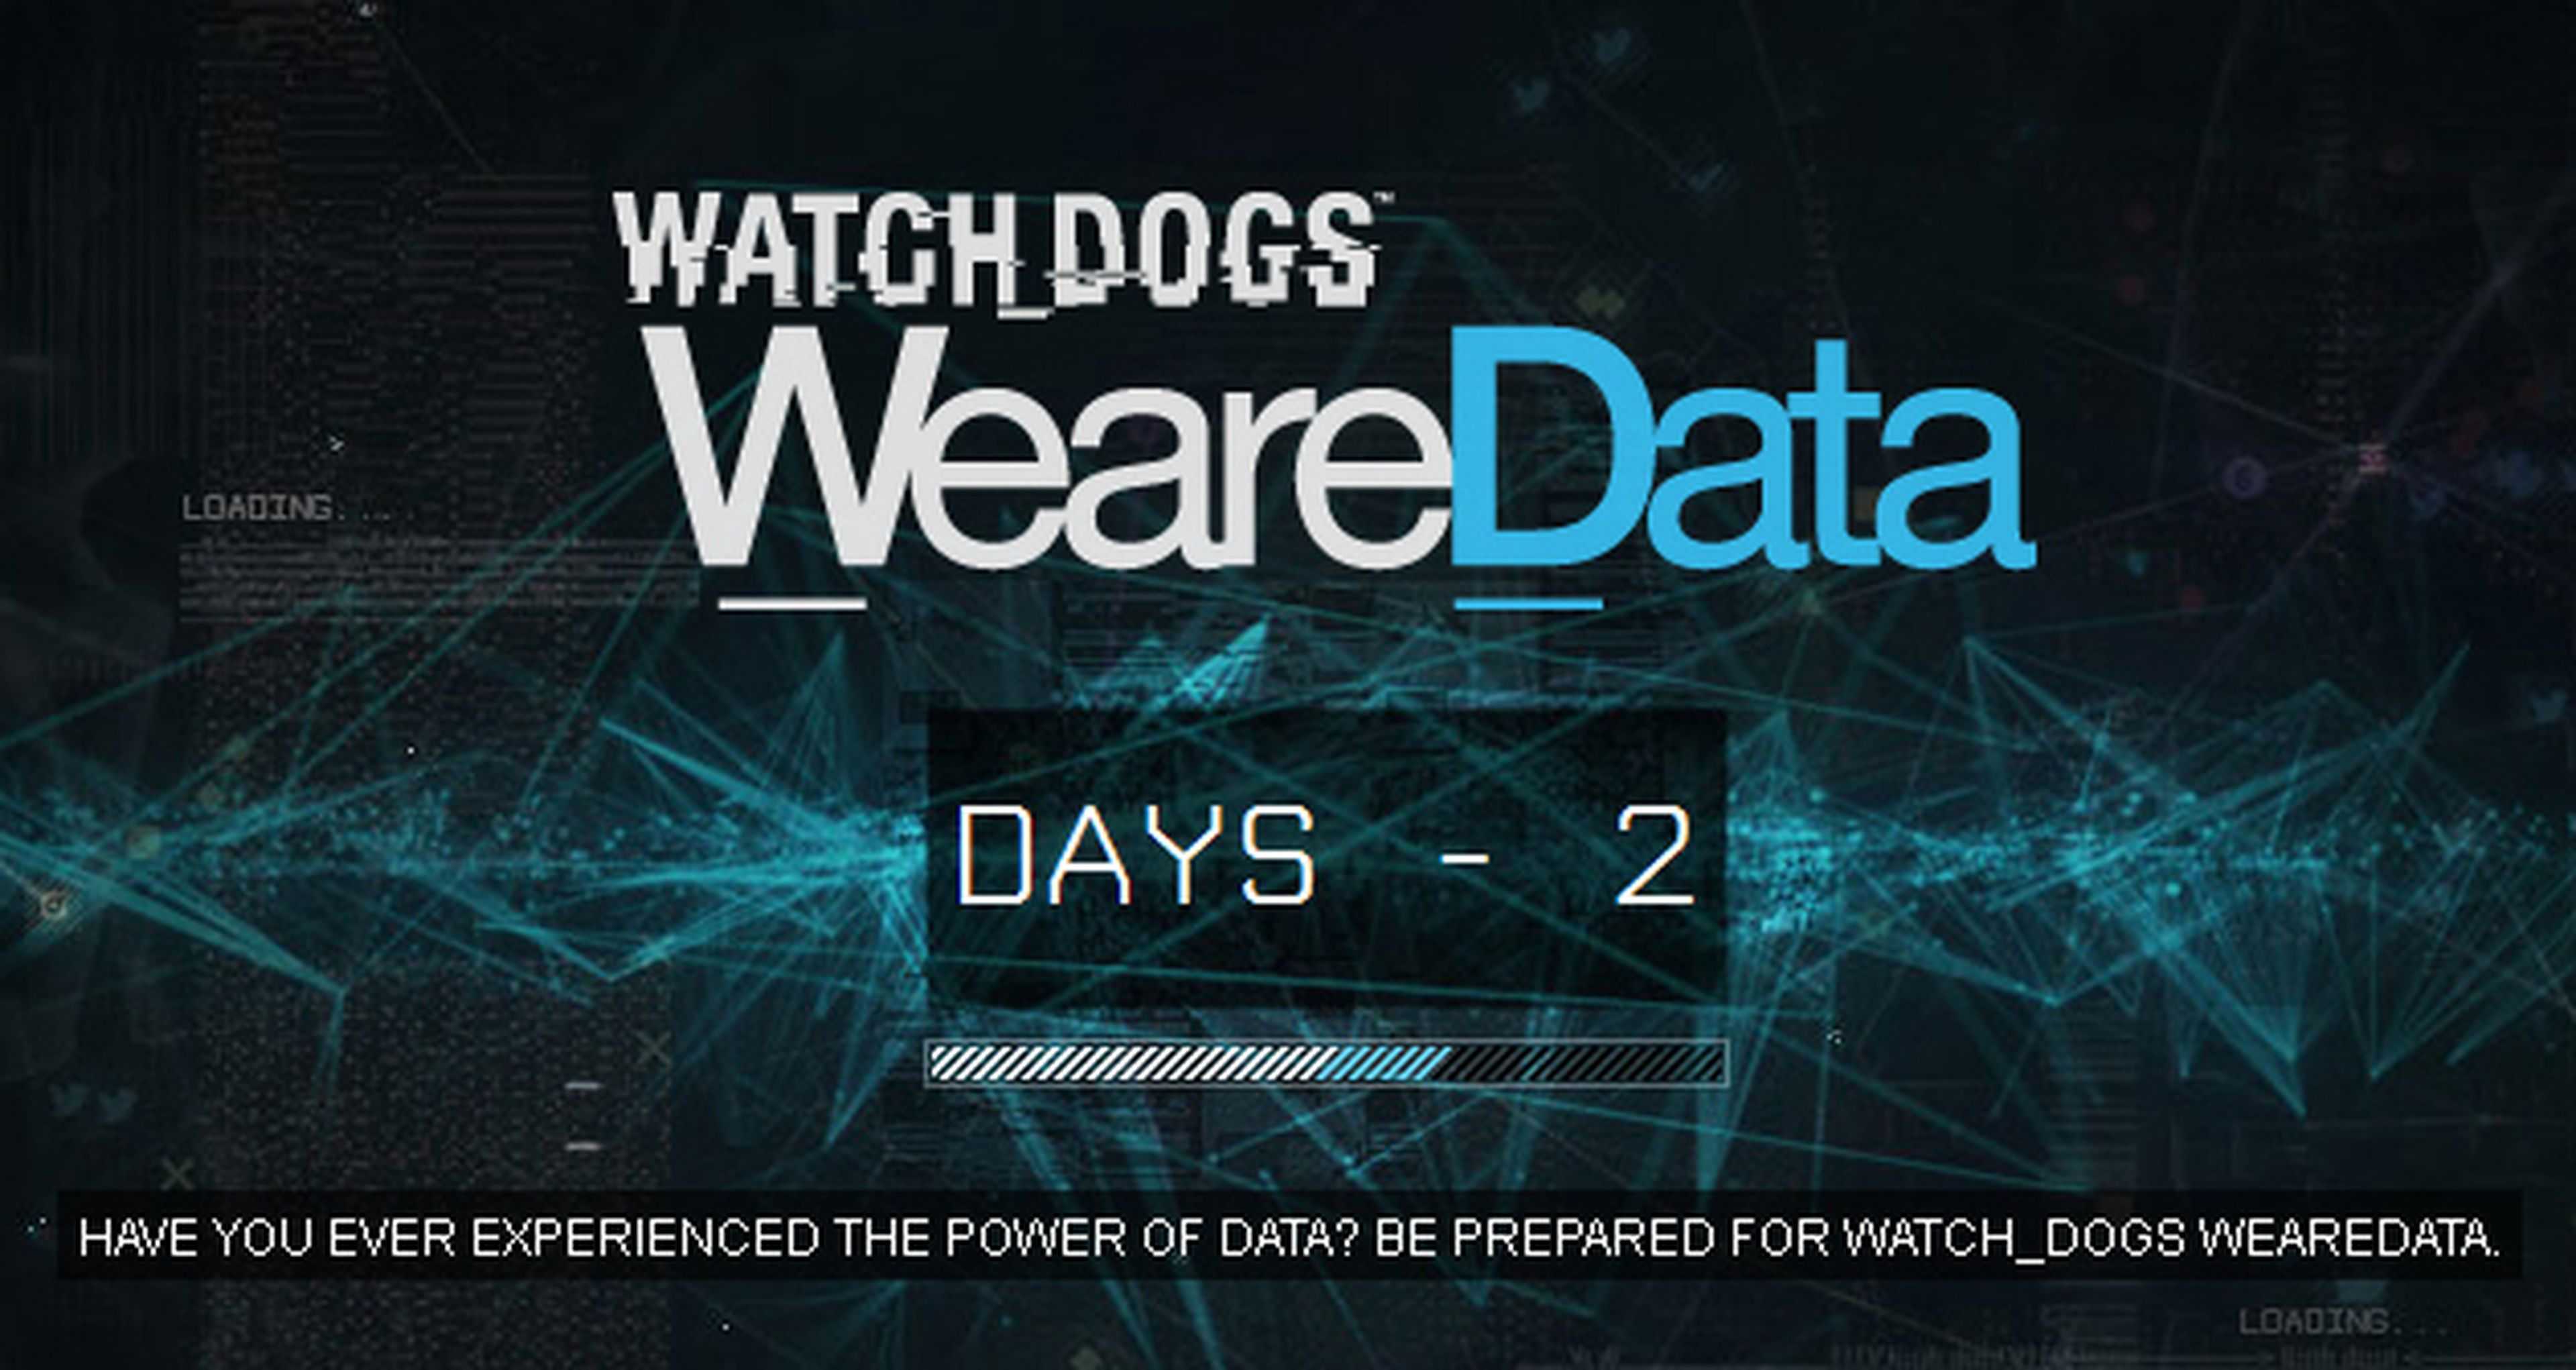 Watch Dogs abre su web "WeareData"